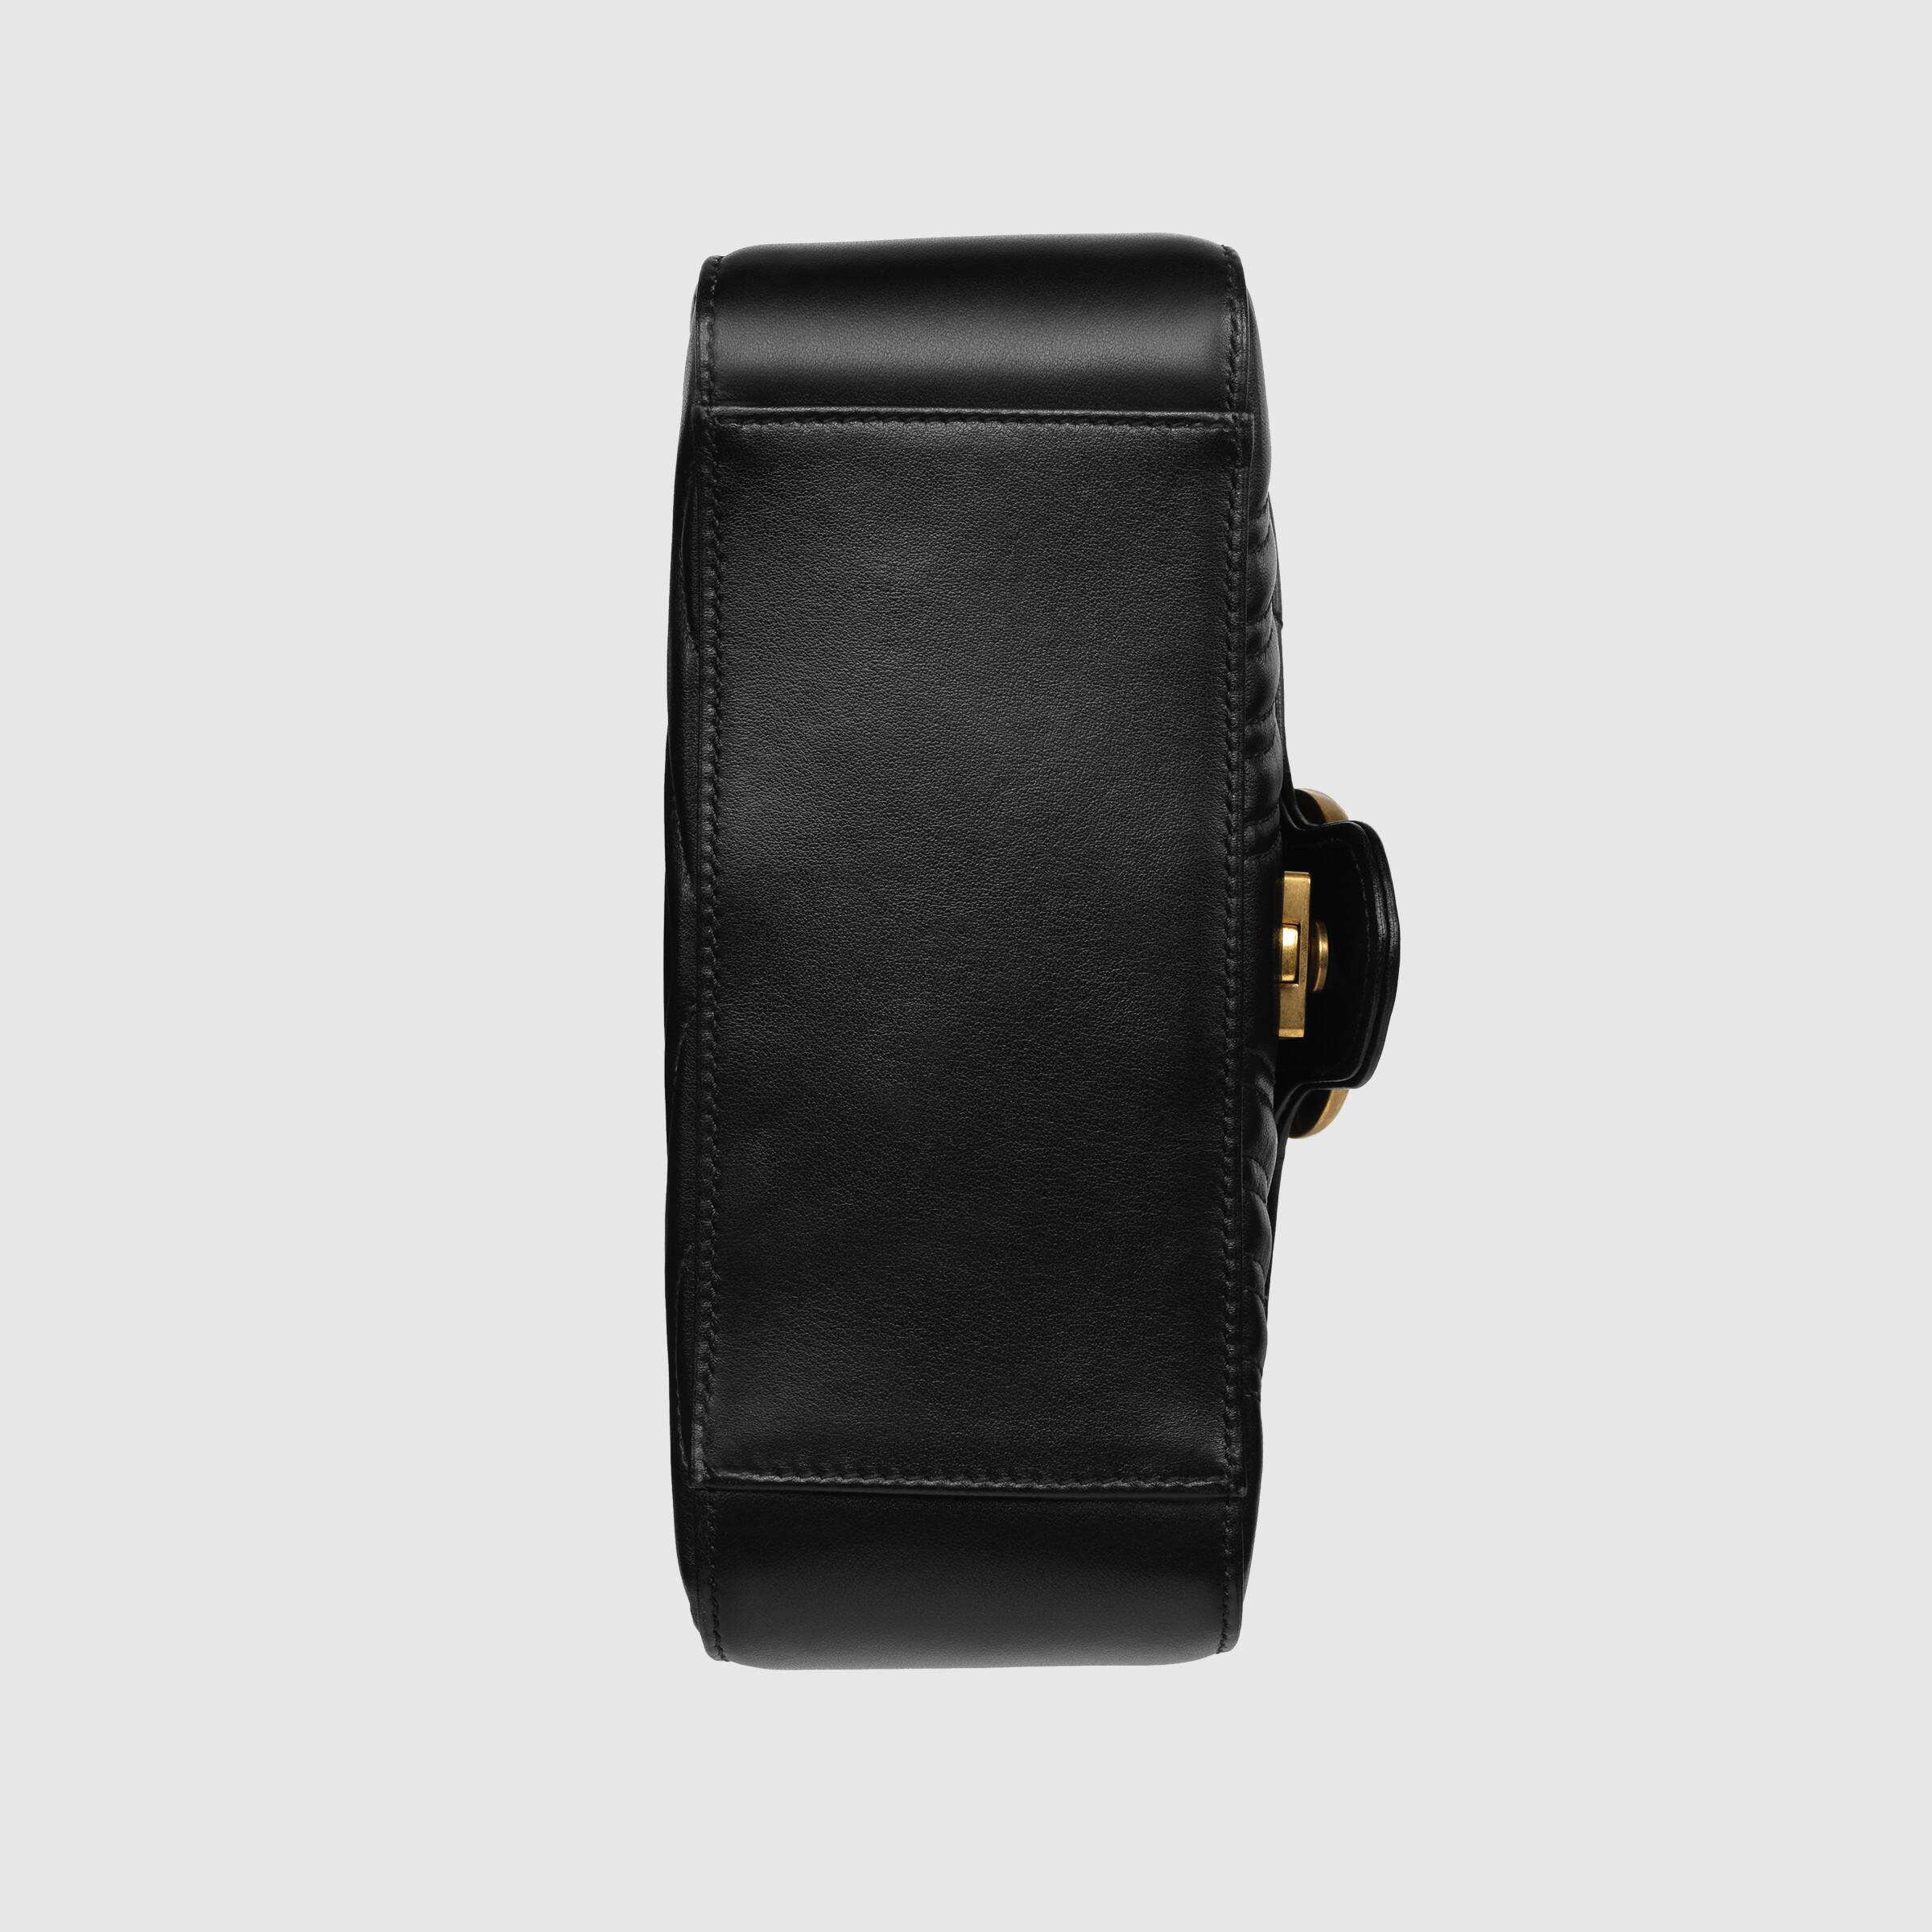 Gucci GG Marmont Mini Top Handle Bag Black